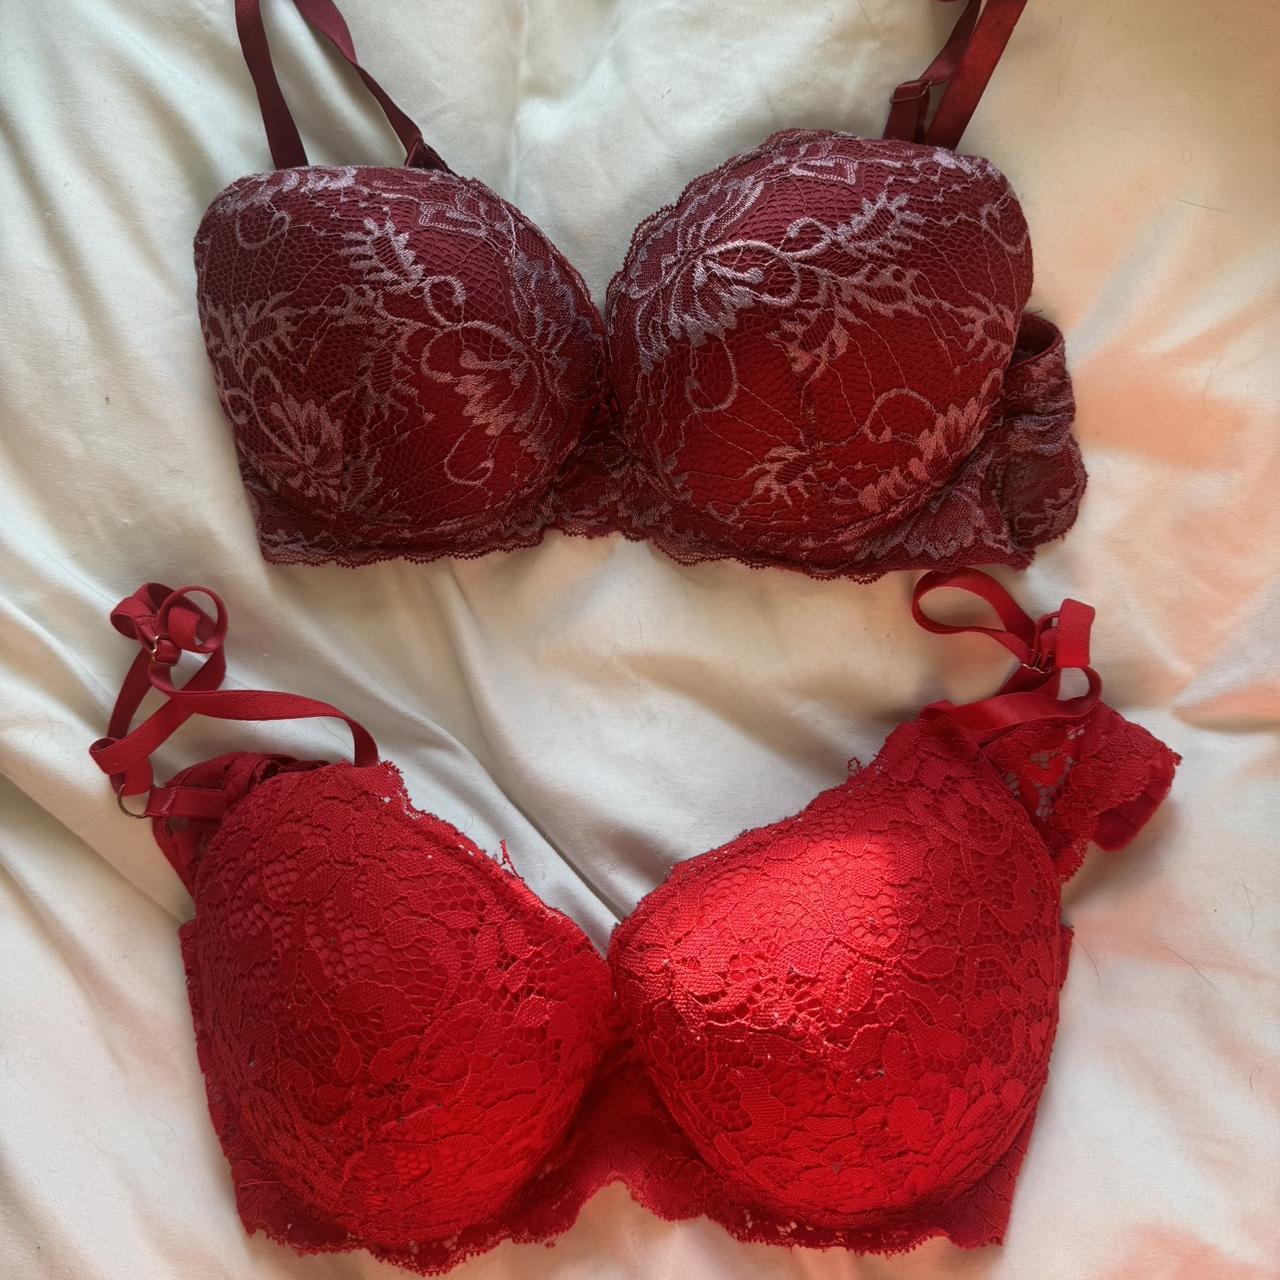 Red and burgundy 34C bra set, super cute and comfy! - Depop